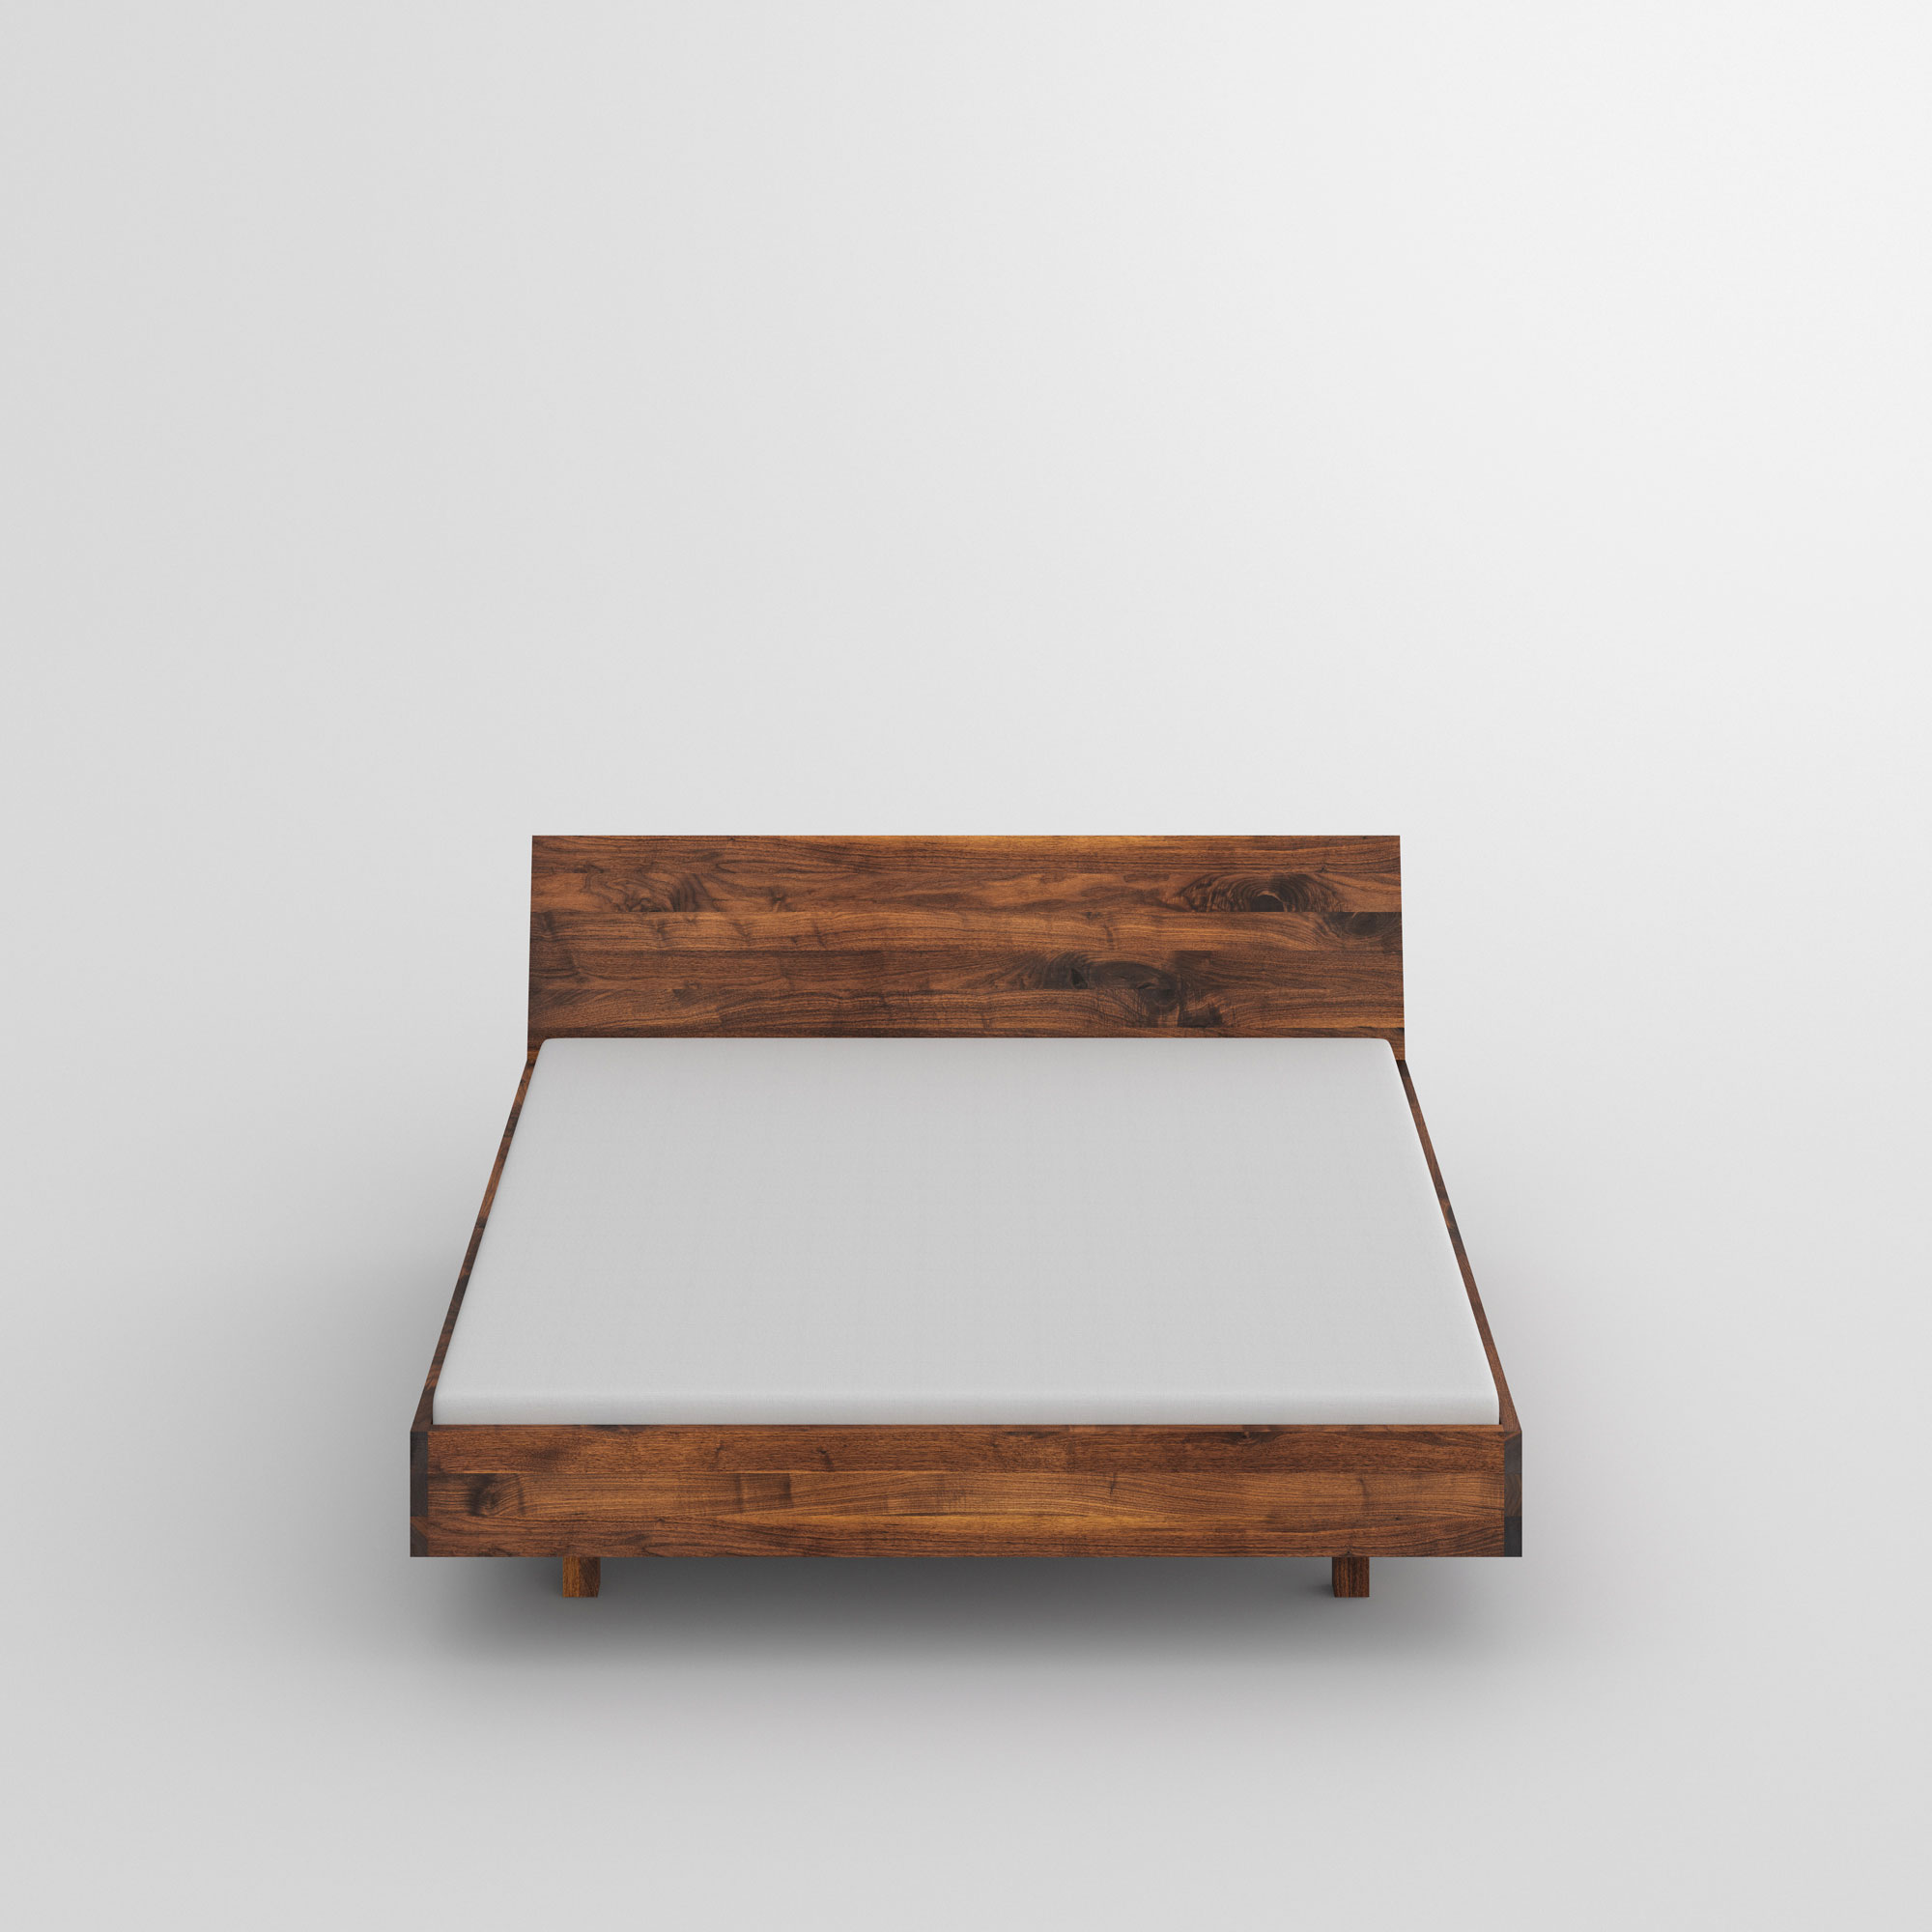 Design Bed QUADRA cam3 custom made in solid wood by vitamin design